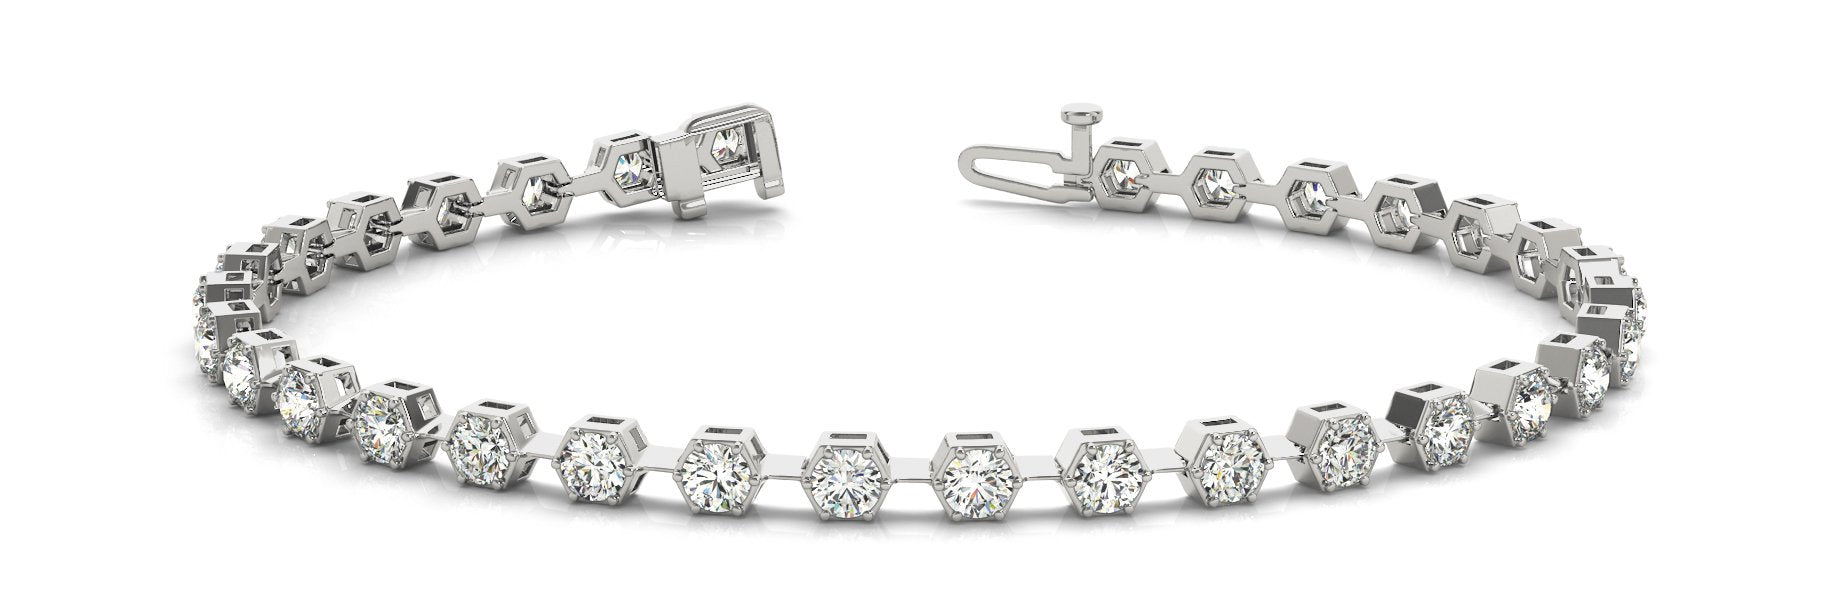 Fancy Diamond Bracelet Ladies 1.52ct tw - 14kt White Gold